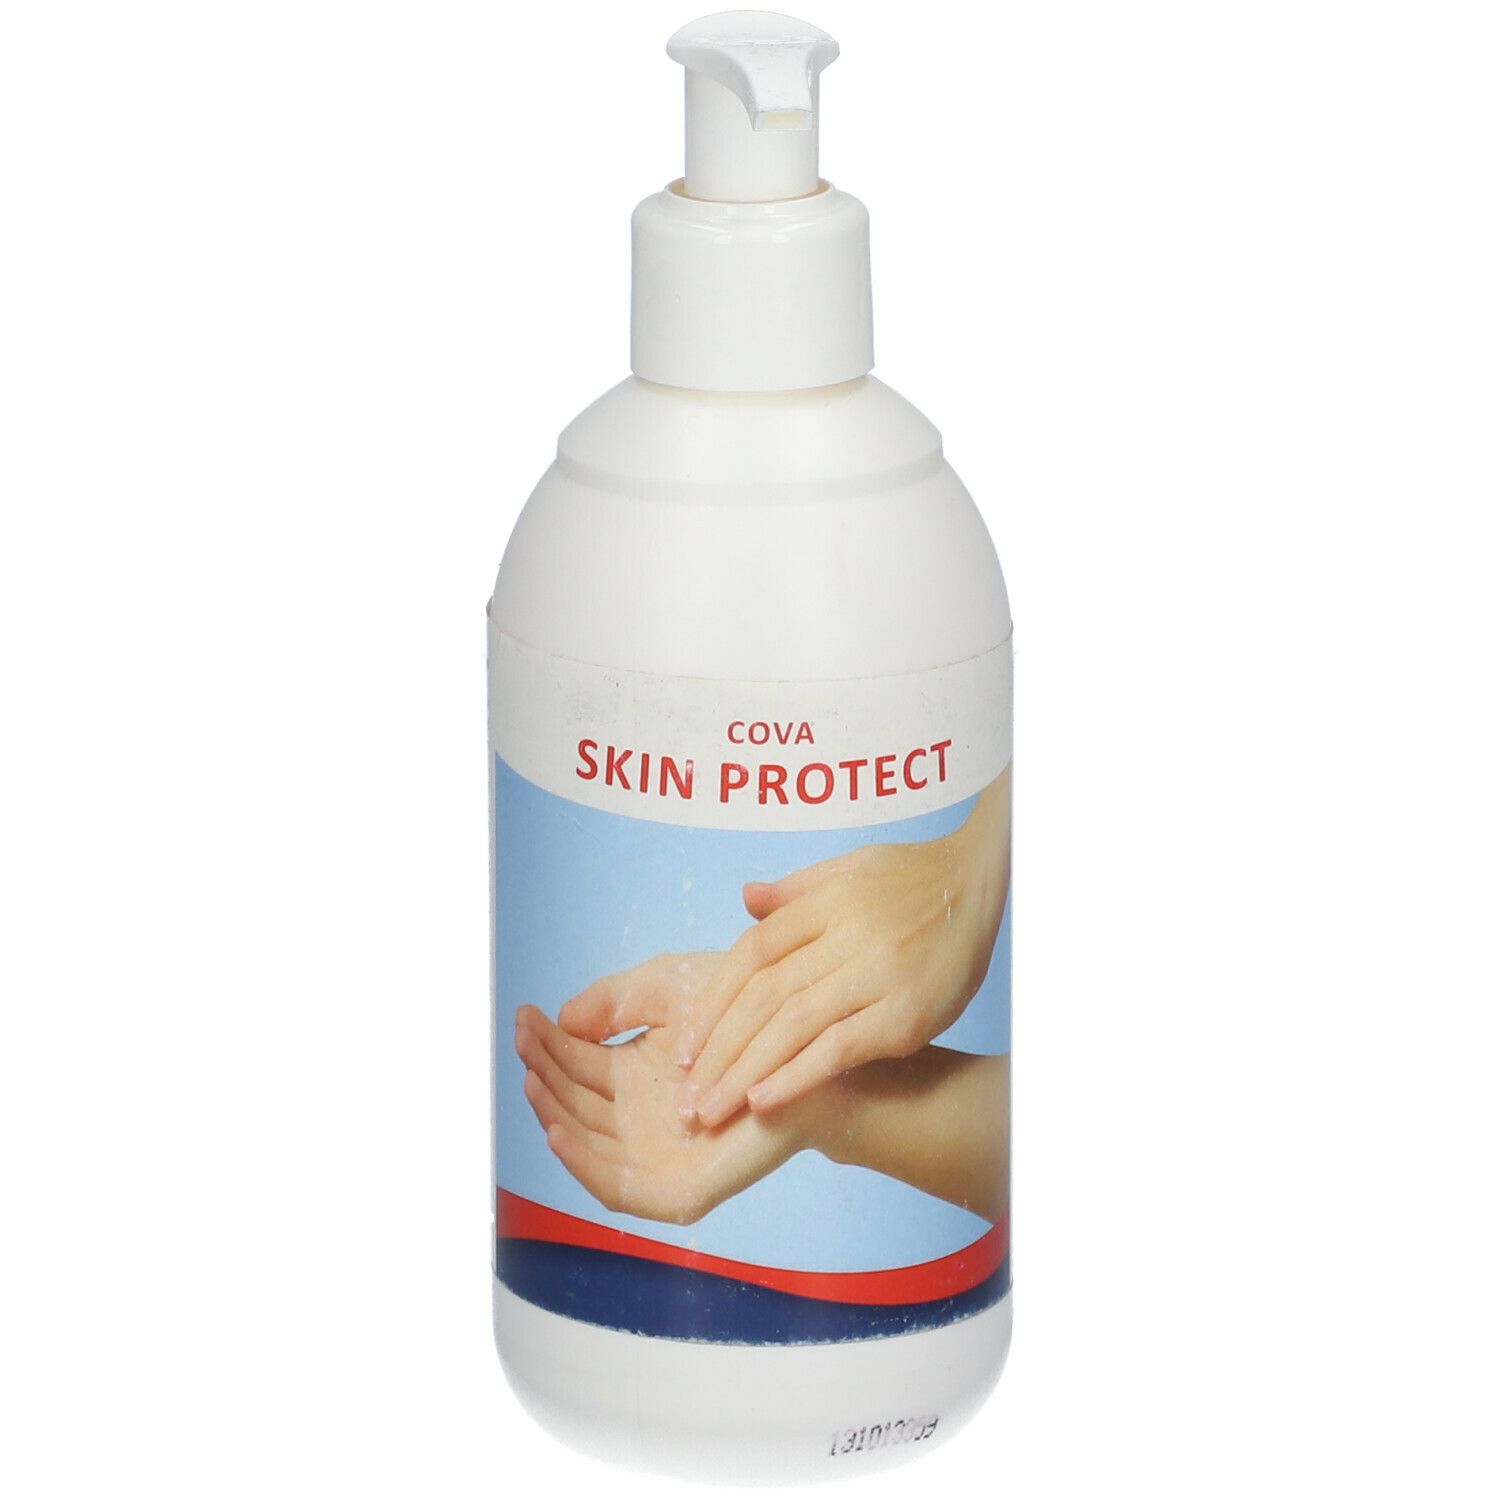 Cova Skin Protect